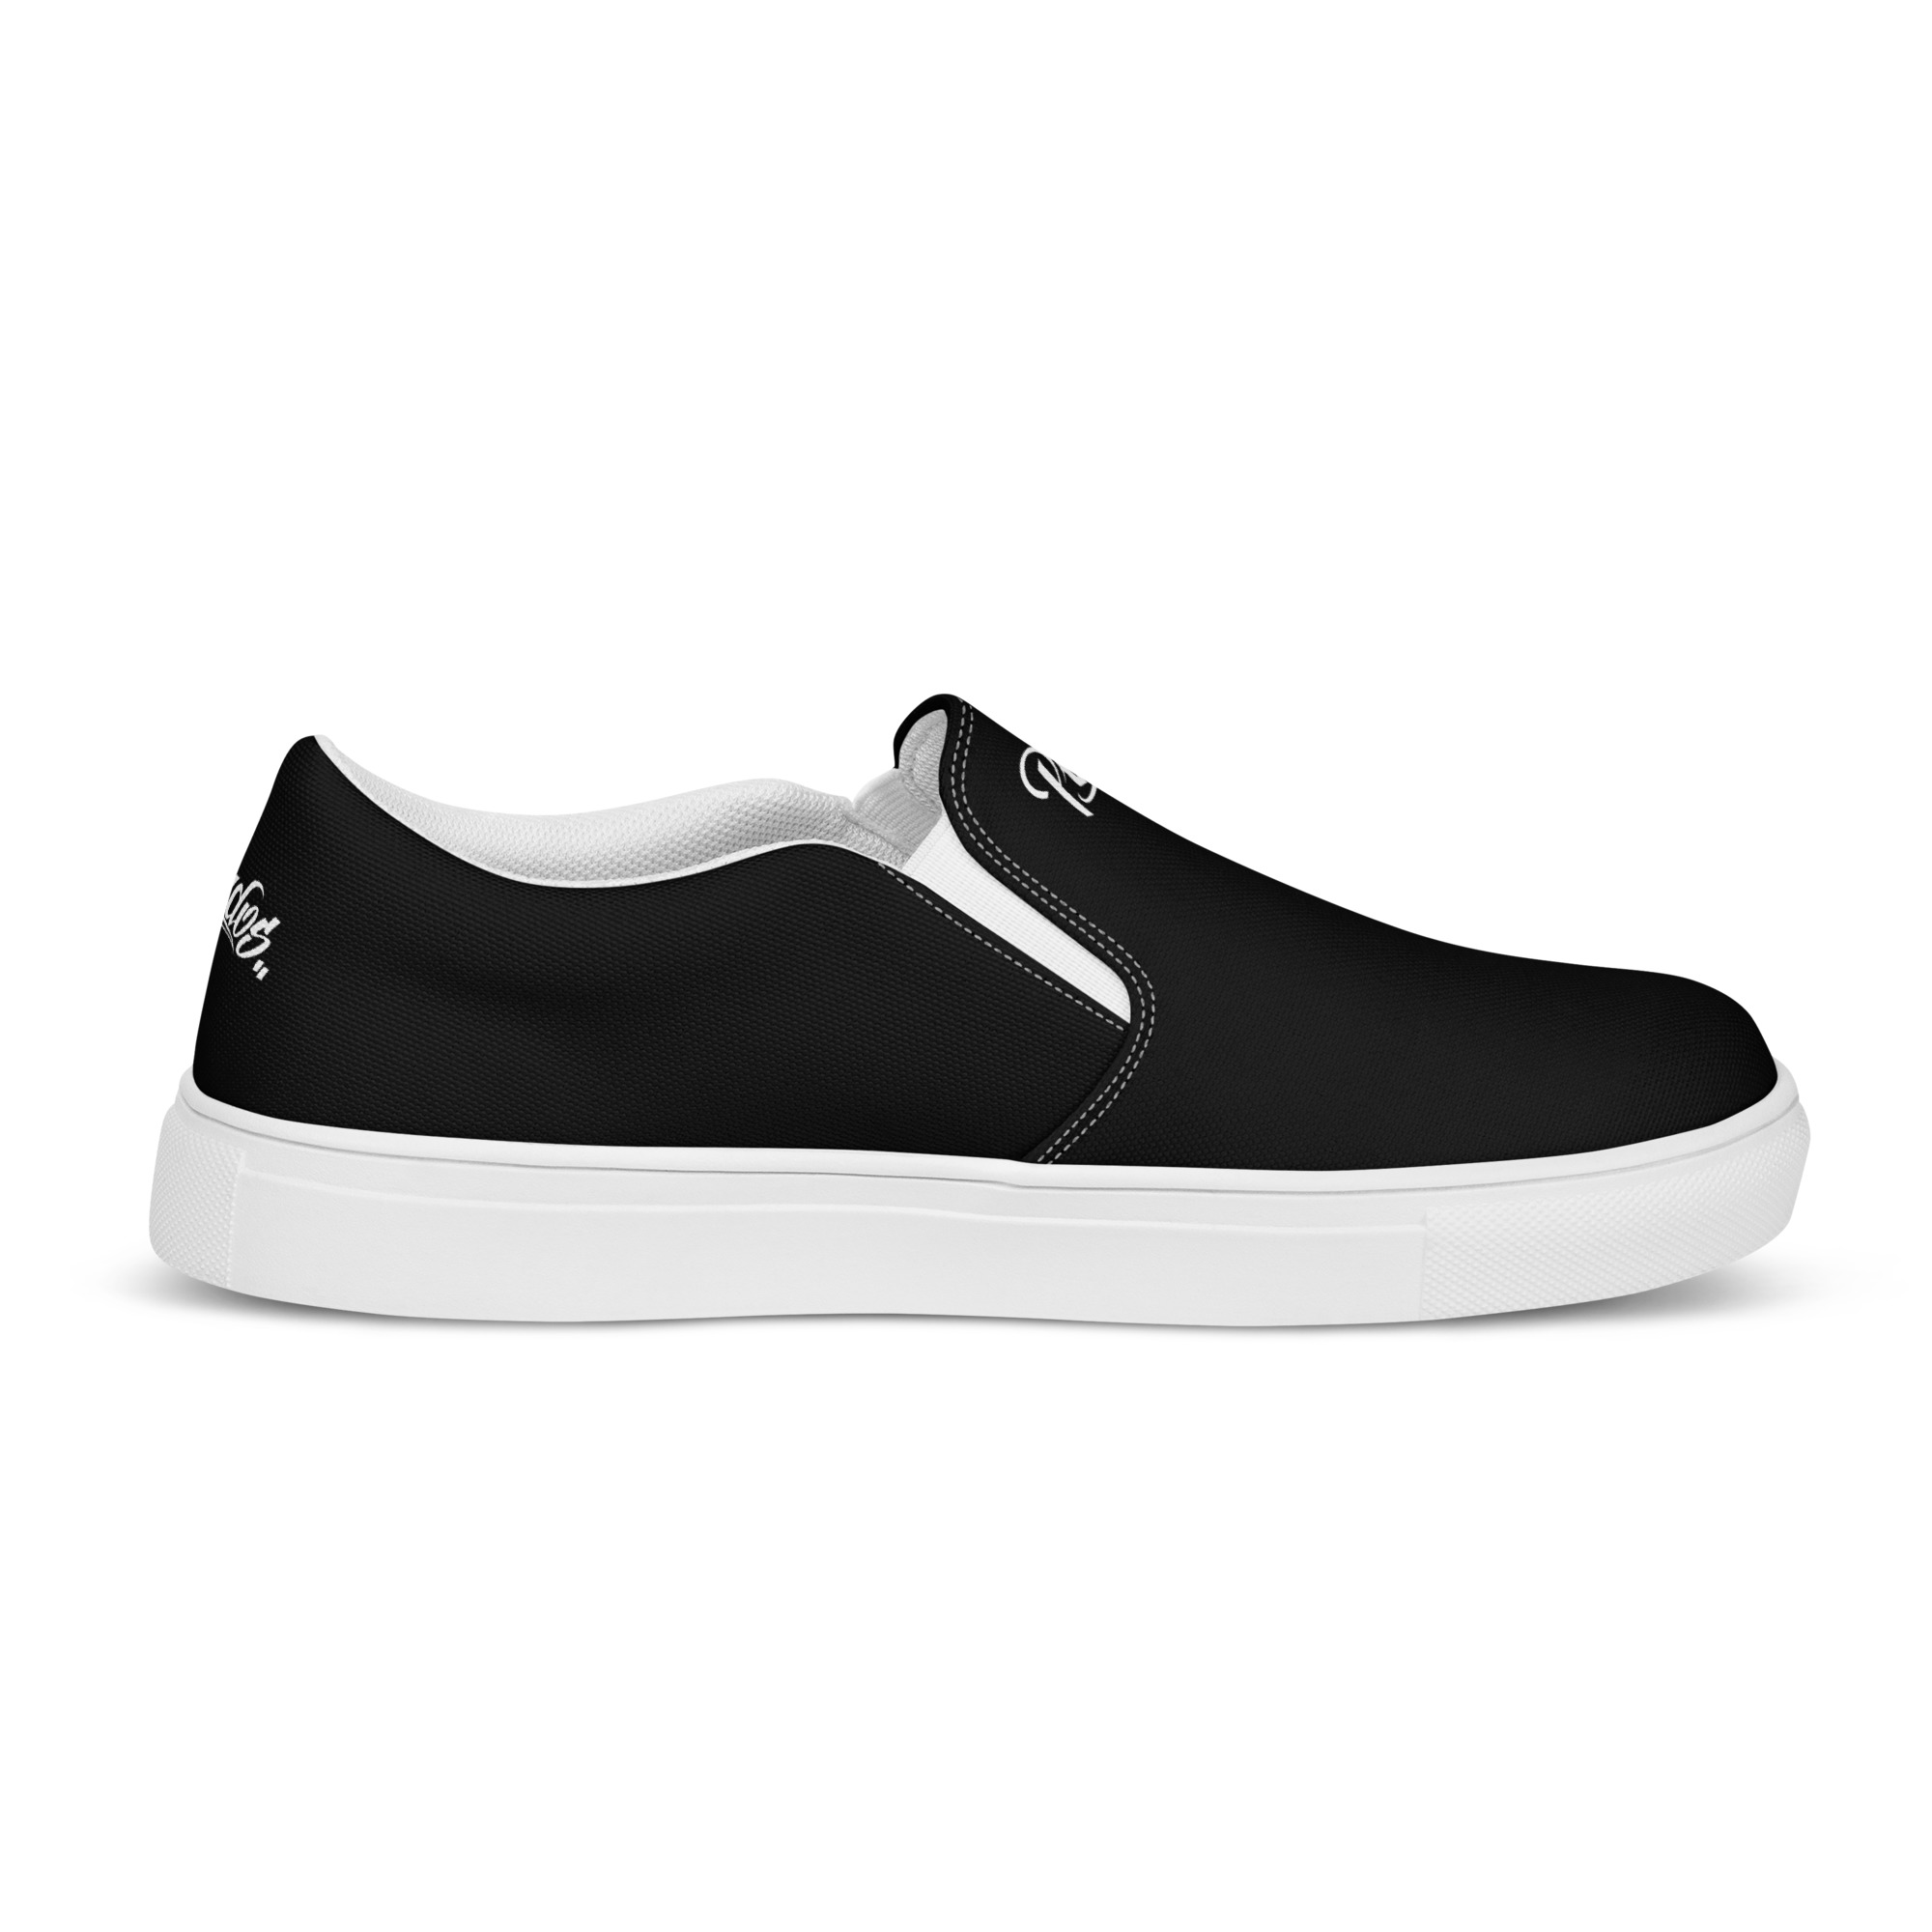 Men’s slip-on shoes x Pirados x Black & White – PIRADOS